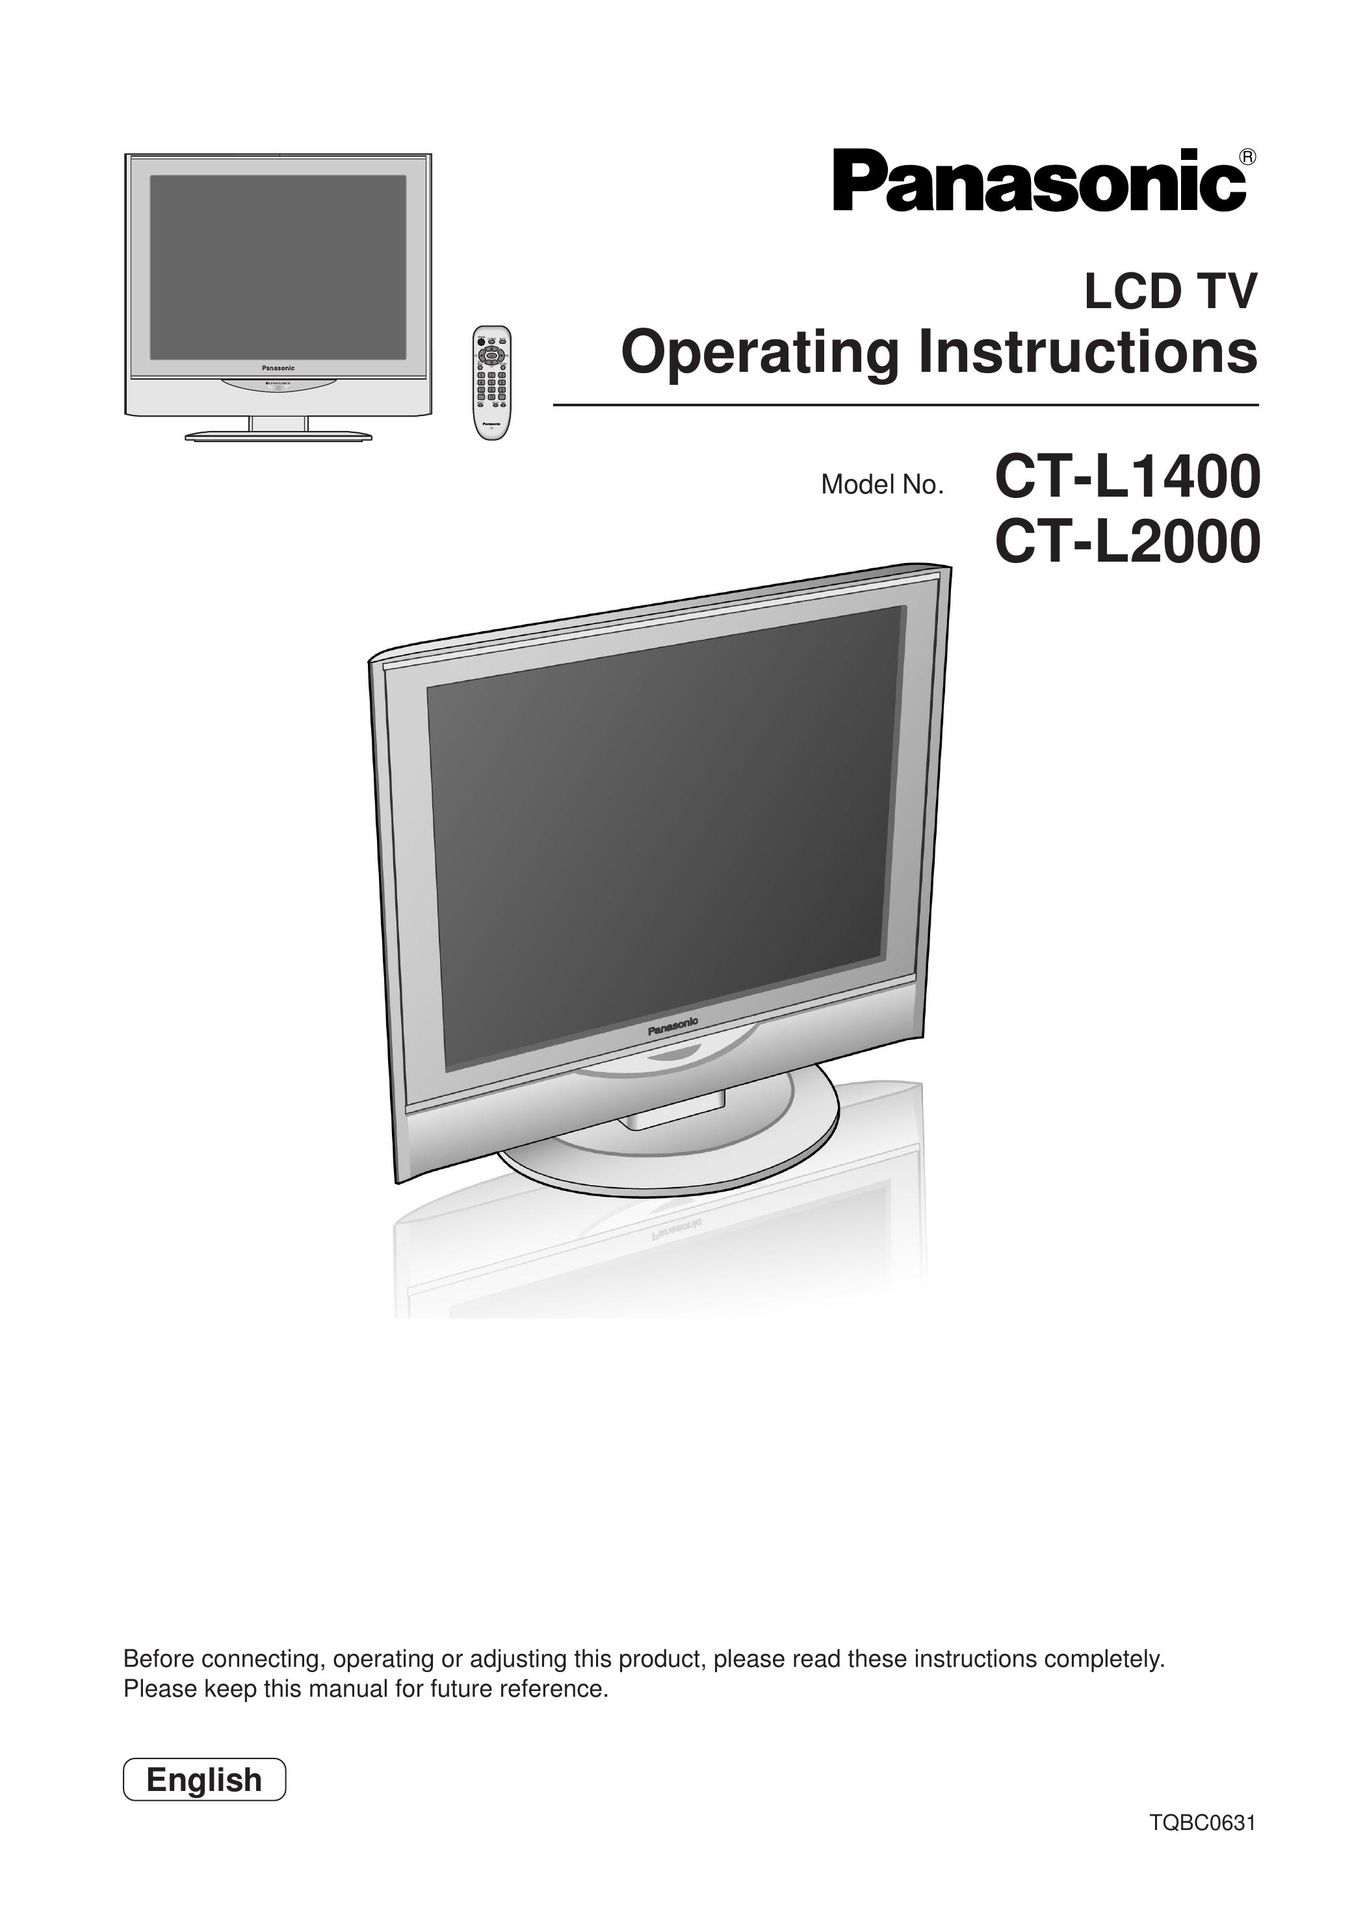 Panasonic CT-L2000 Flat Panel Television User Manual